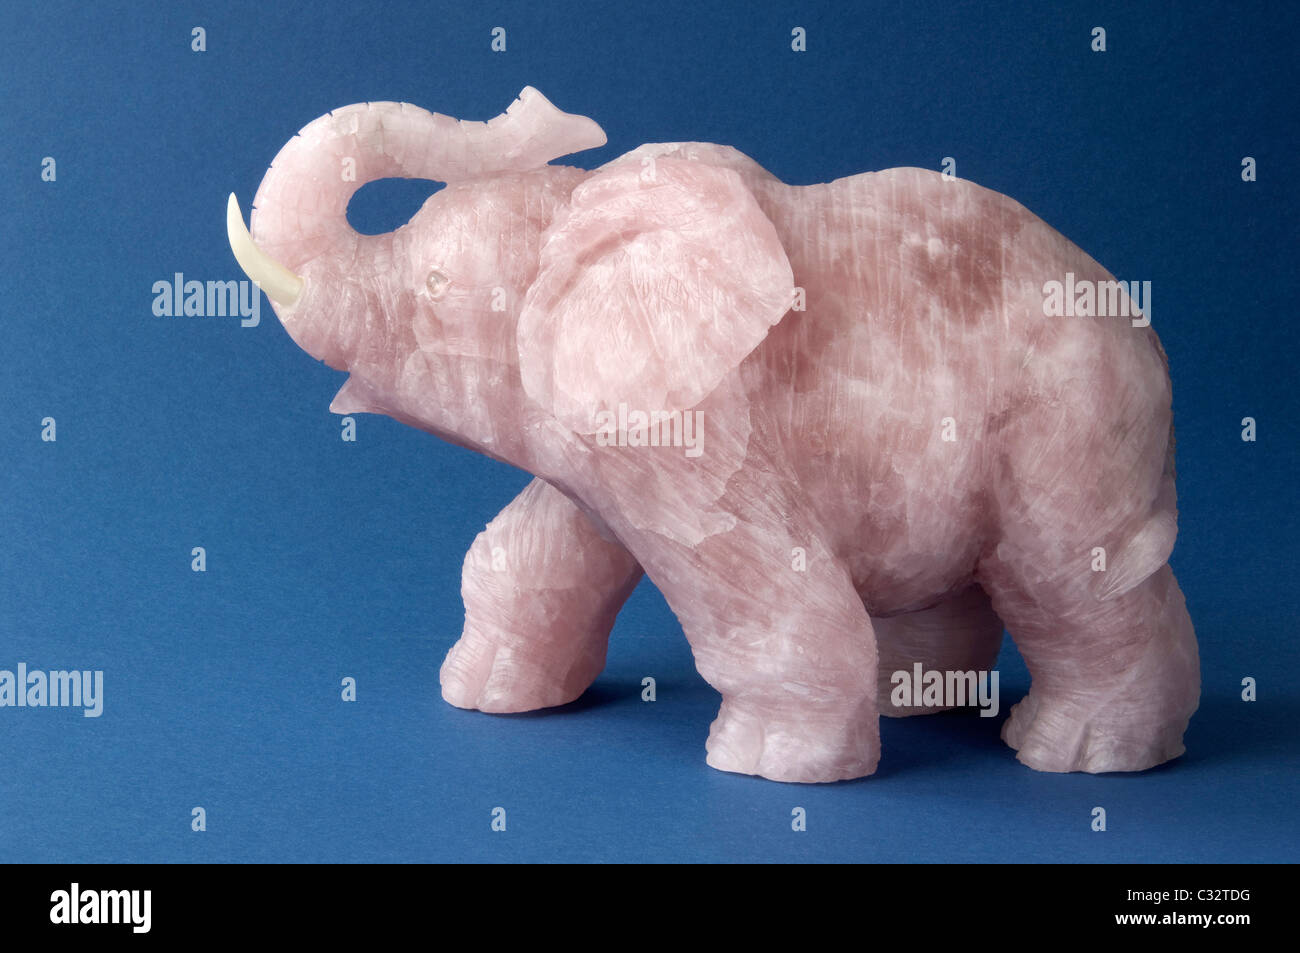 Elephant made of Rose Quartz, studio picture against a blue background. Stock Photo